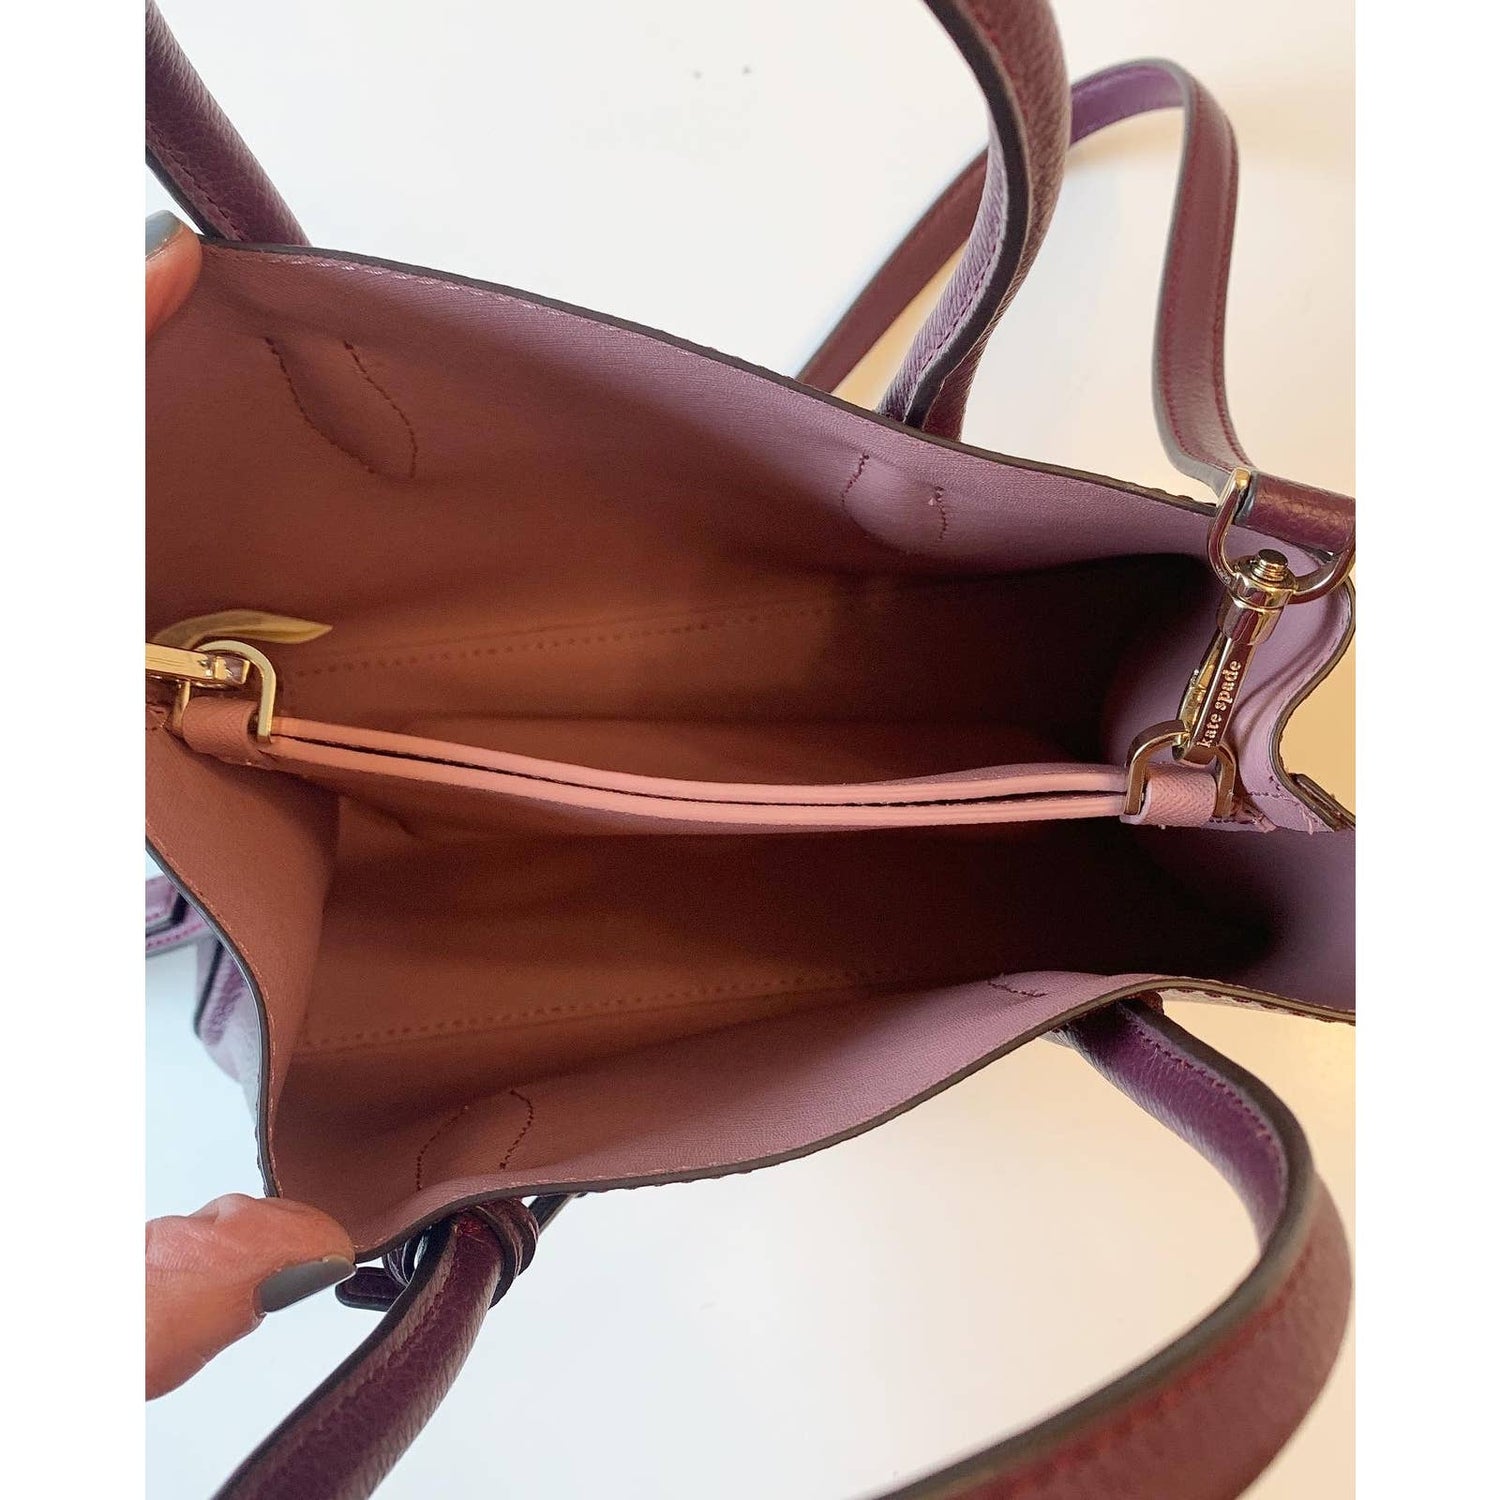 Kate Spade VIOLET PURPLE Shoulder Bag Tote Carry All Pebble Leather Purse |  eBay